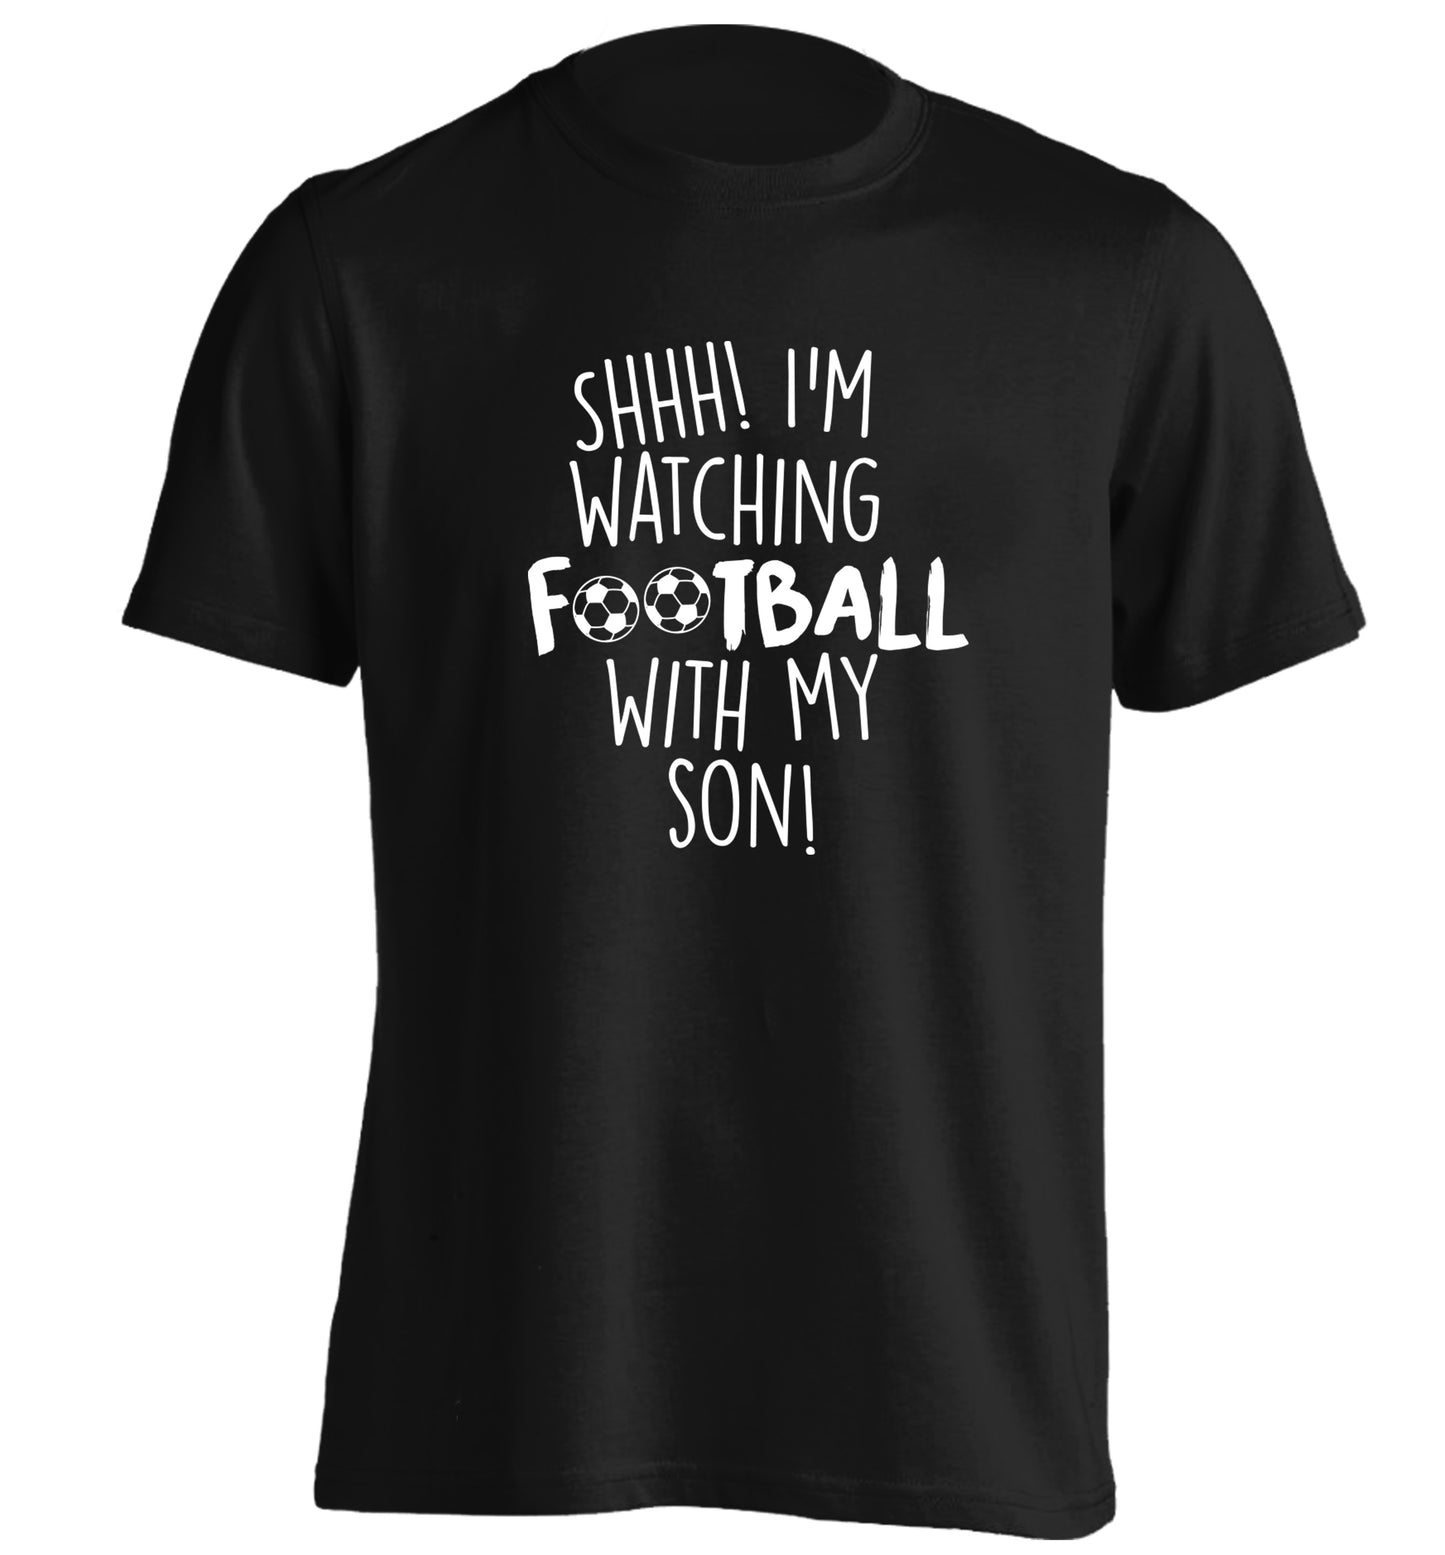 Shhh I'm watching football with my son adults unisexblack Tshirt 2XL